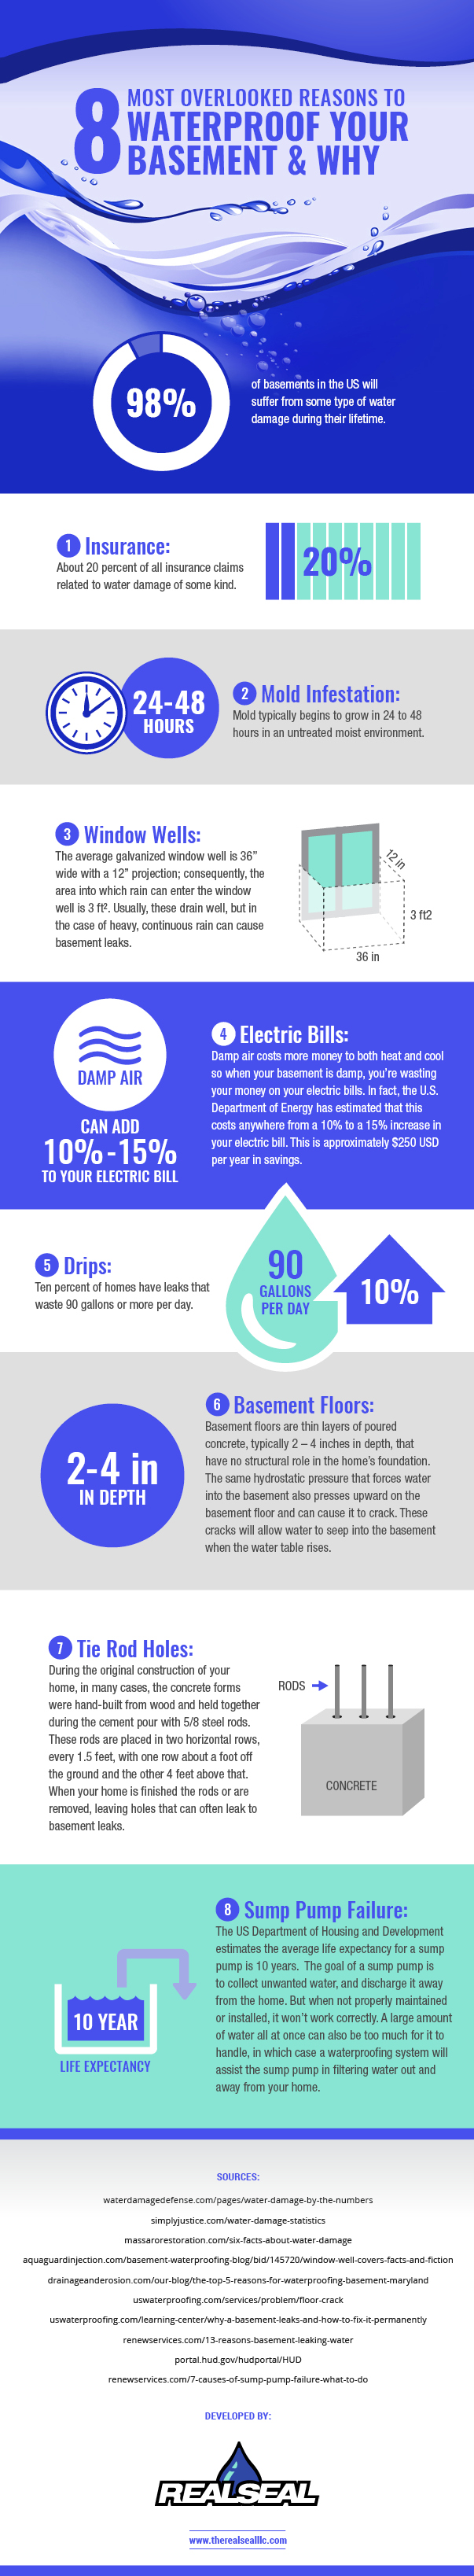 8 Most Overlooked Reasons to Waterproof Your Basement